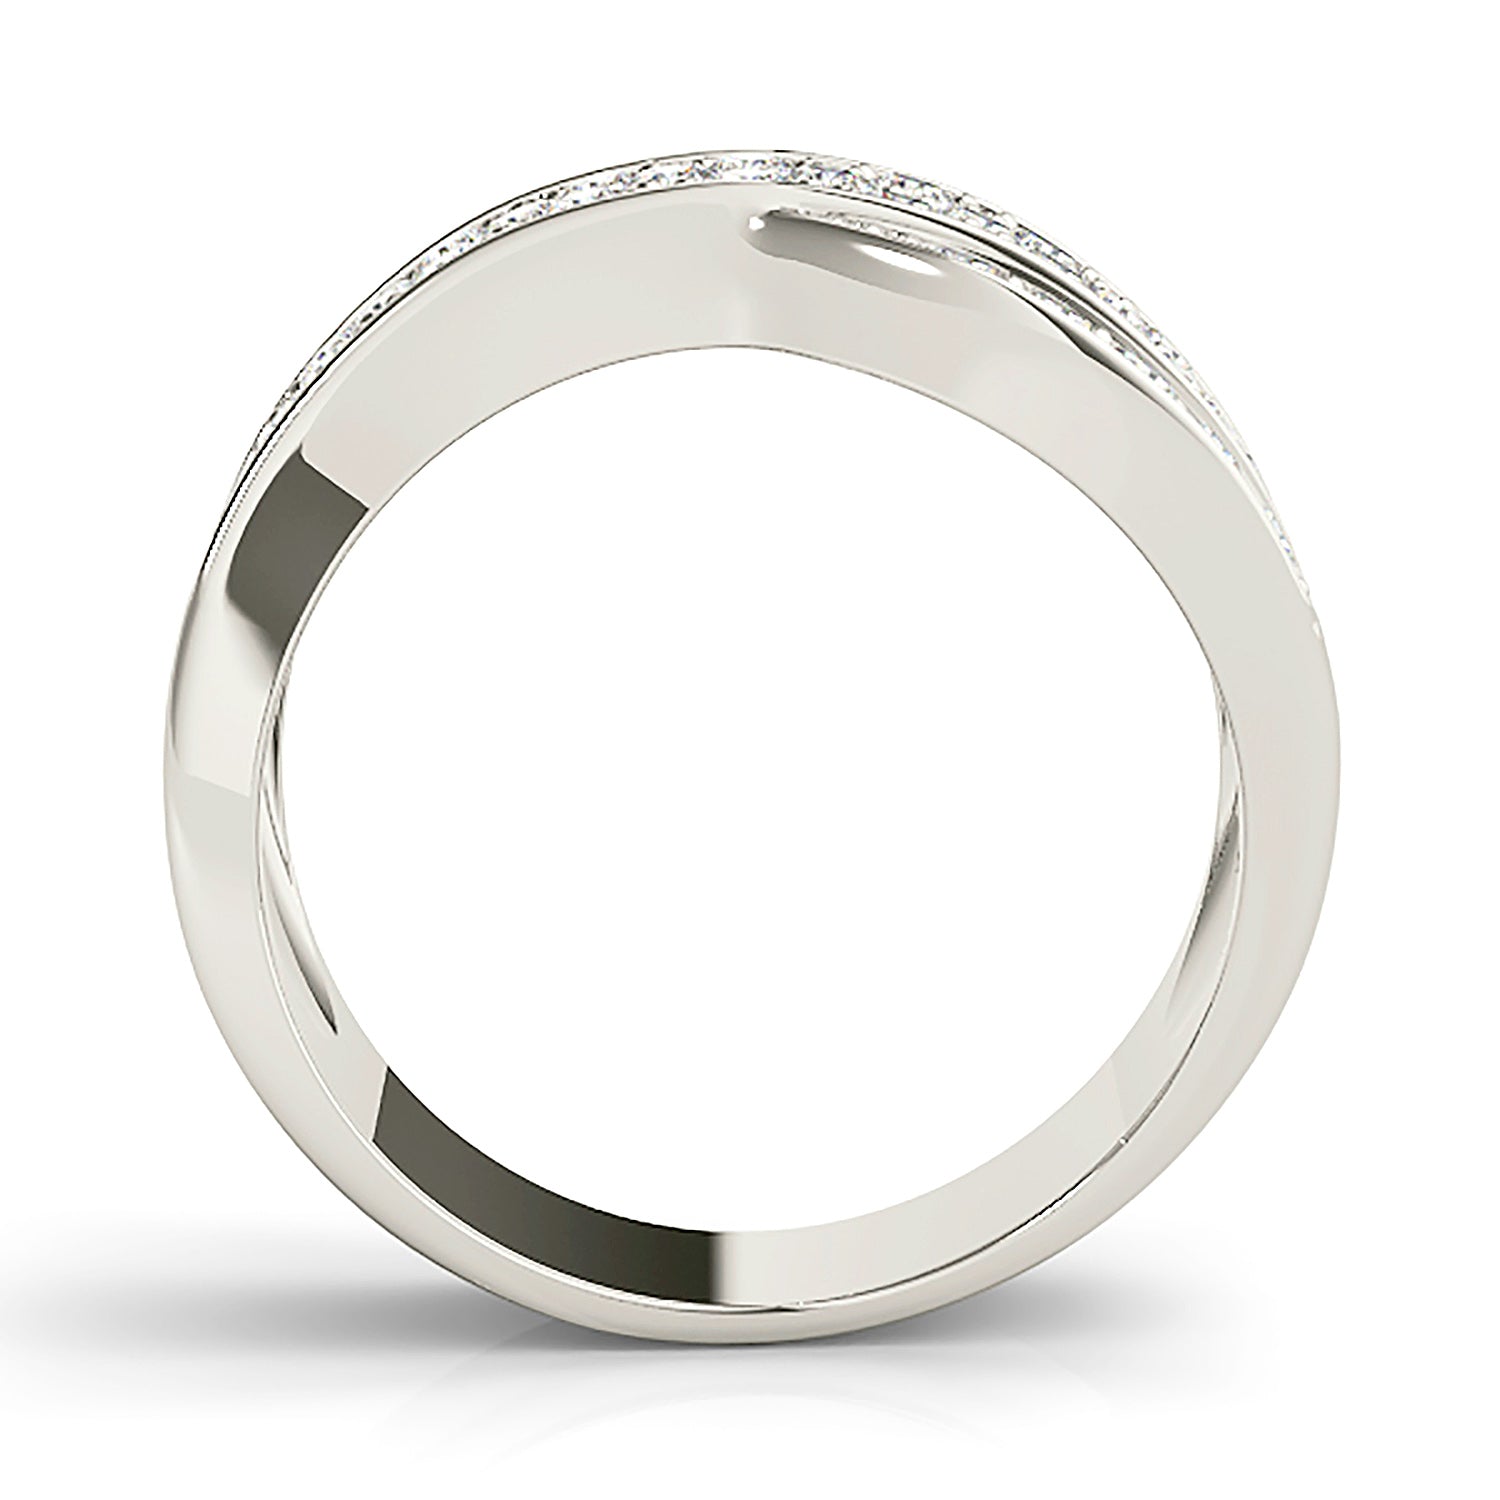 Diamond Statement Ring - 14K/18K Solid White Gold or Platinum | Pave Set Diamond Ring | Slightly Crossed Diamond Ring-in 14K/18K White, Yellow, Rose Gold and Platinum - Christmas Jewelry Gift -VIRABYANI